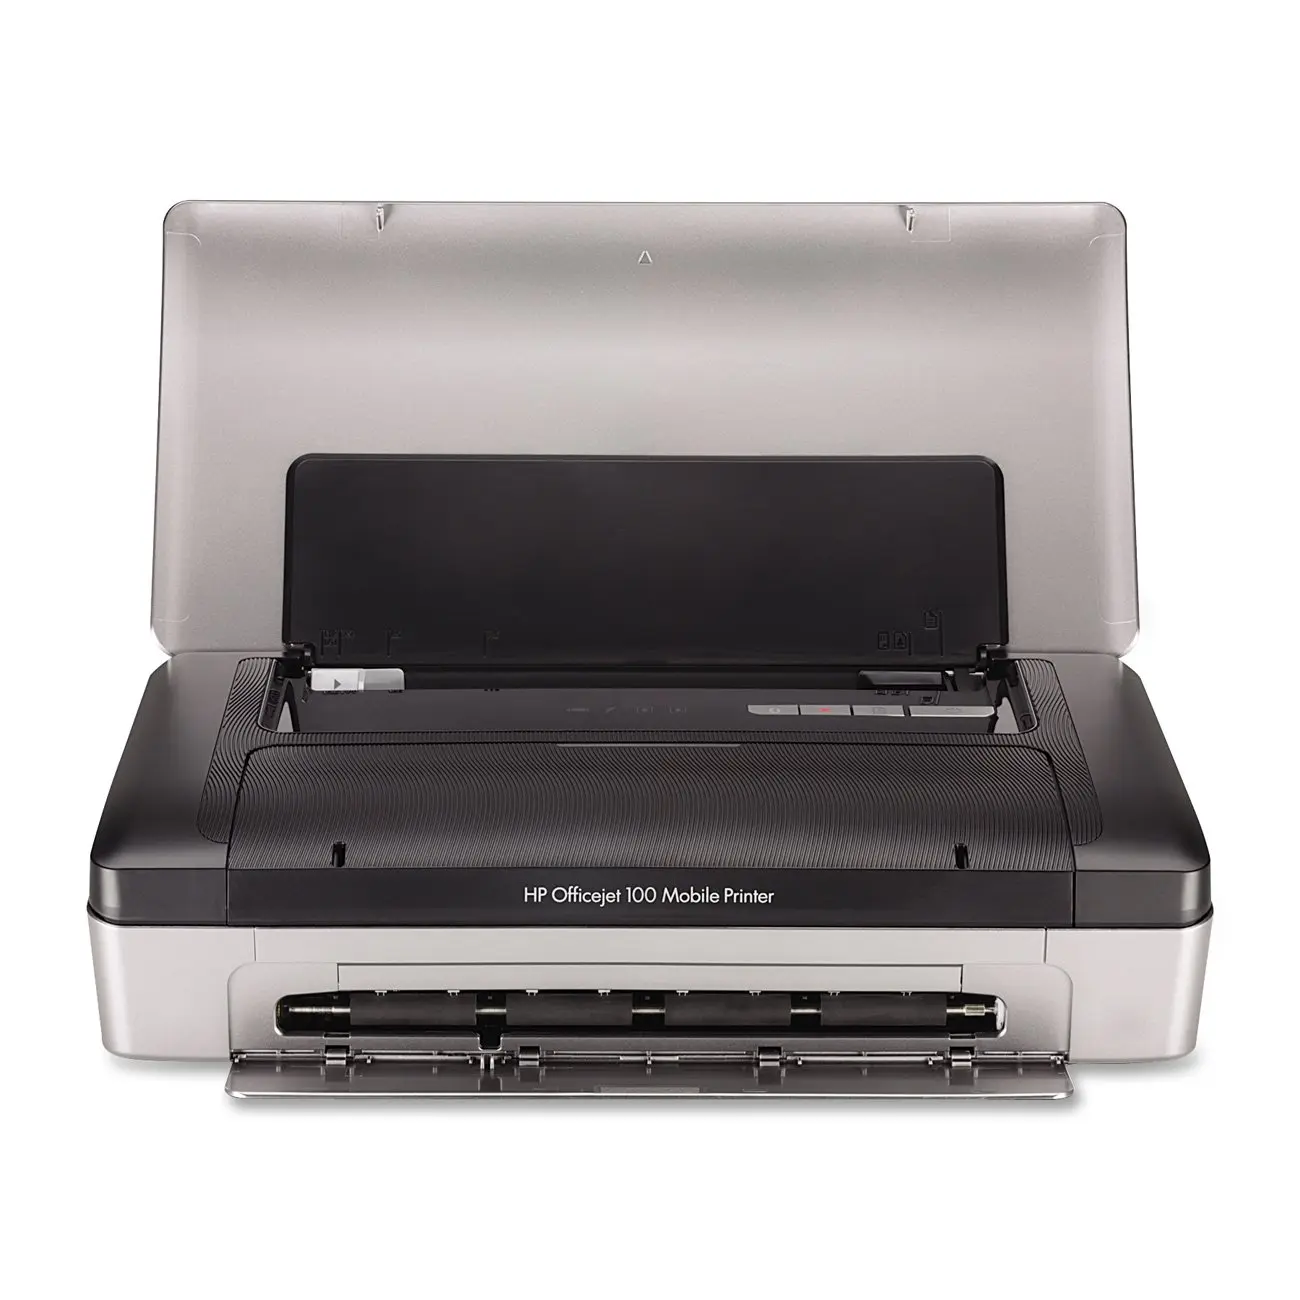 Ultimate portable printing: hewlett packard officejet 100 mobile printer